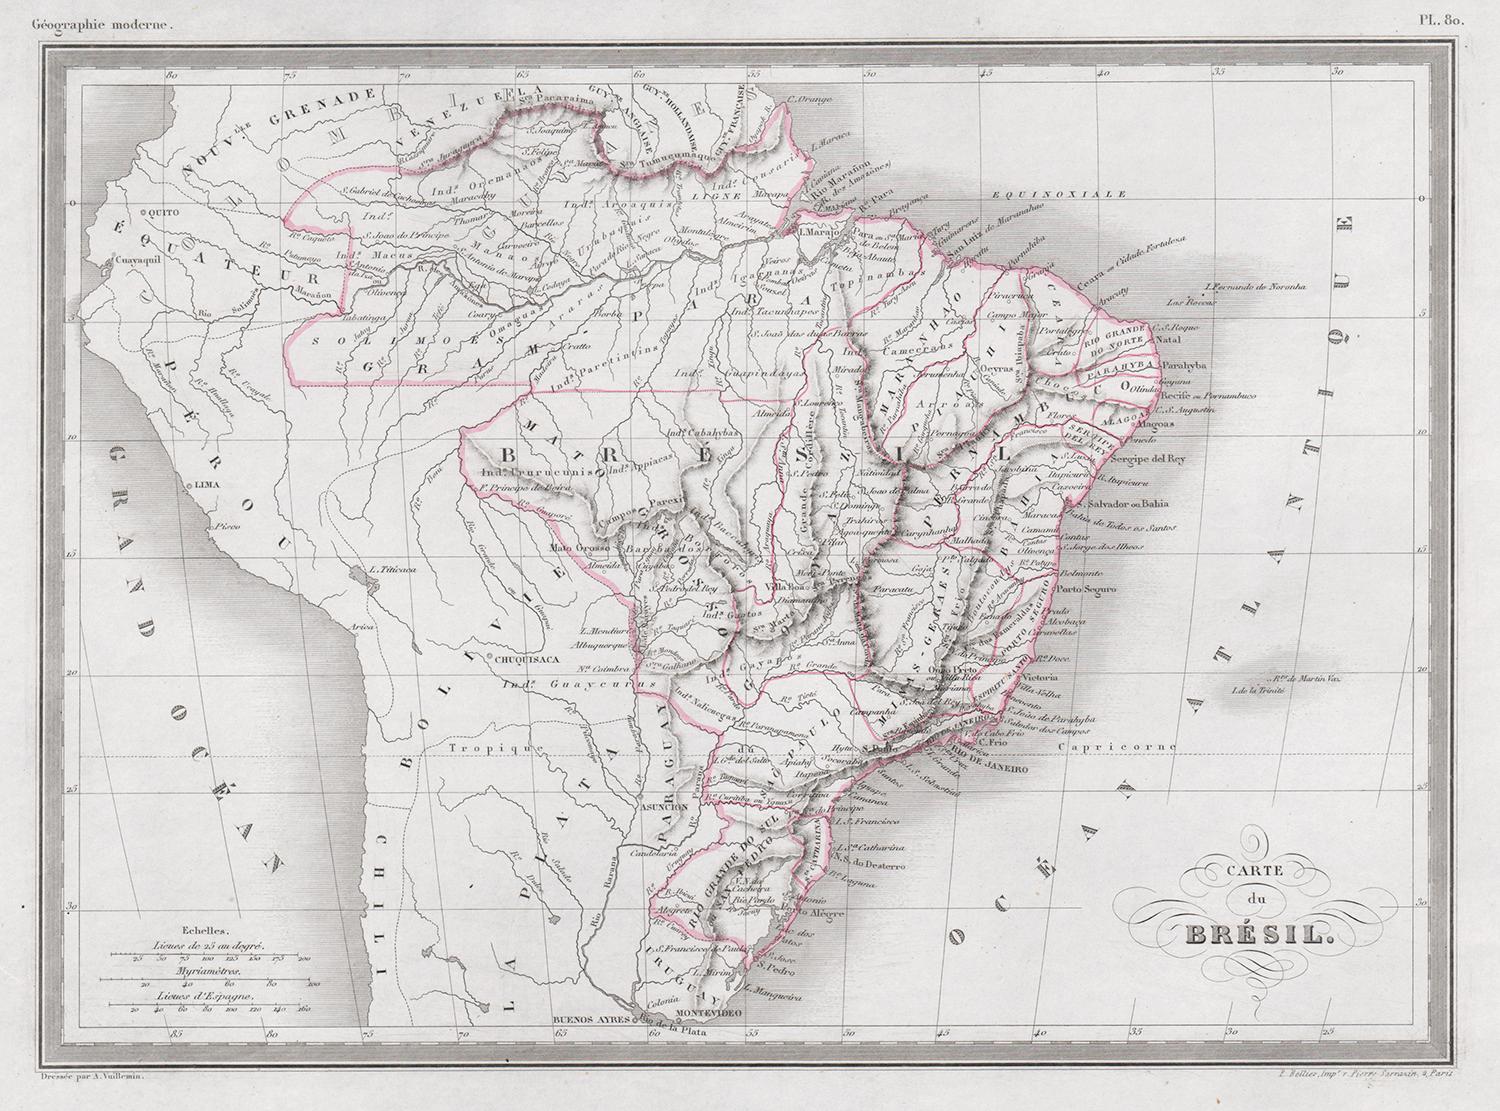 Alexandre Vuillemin Print - Carte du Bresil, antique 1860s engraved map of Brazil